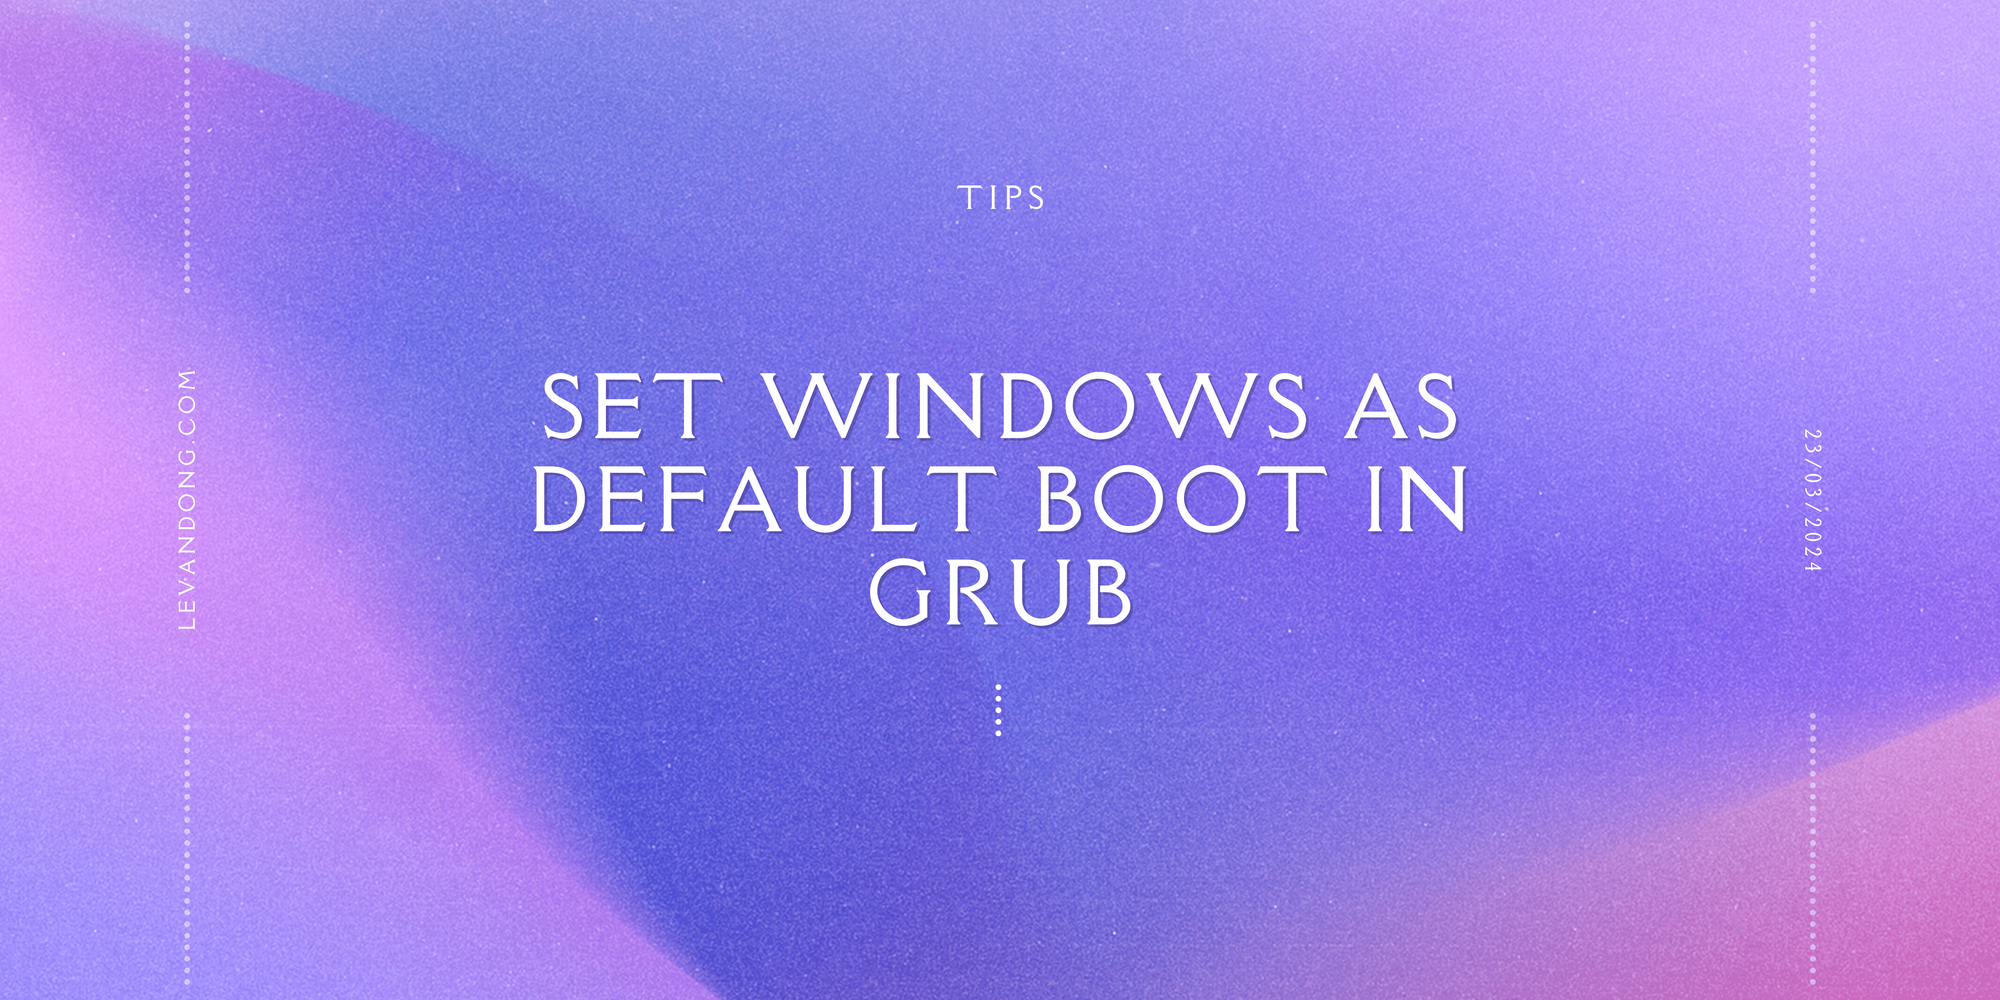 Changing default Grub boot options